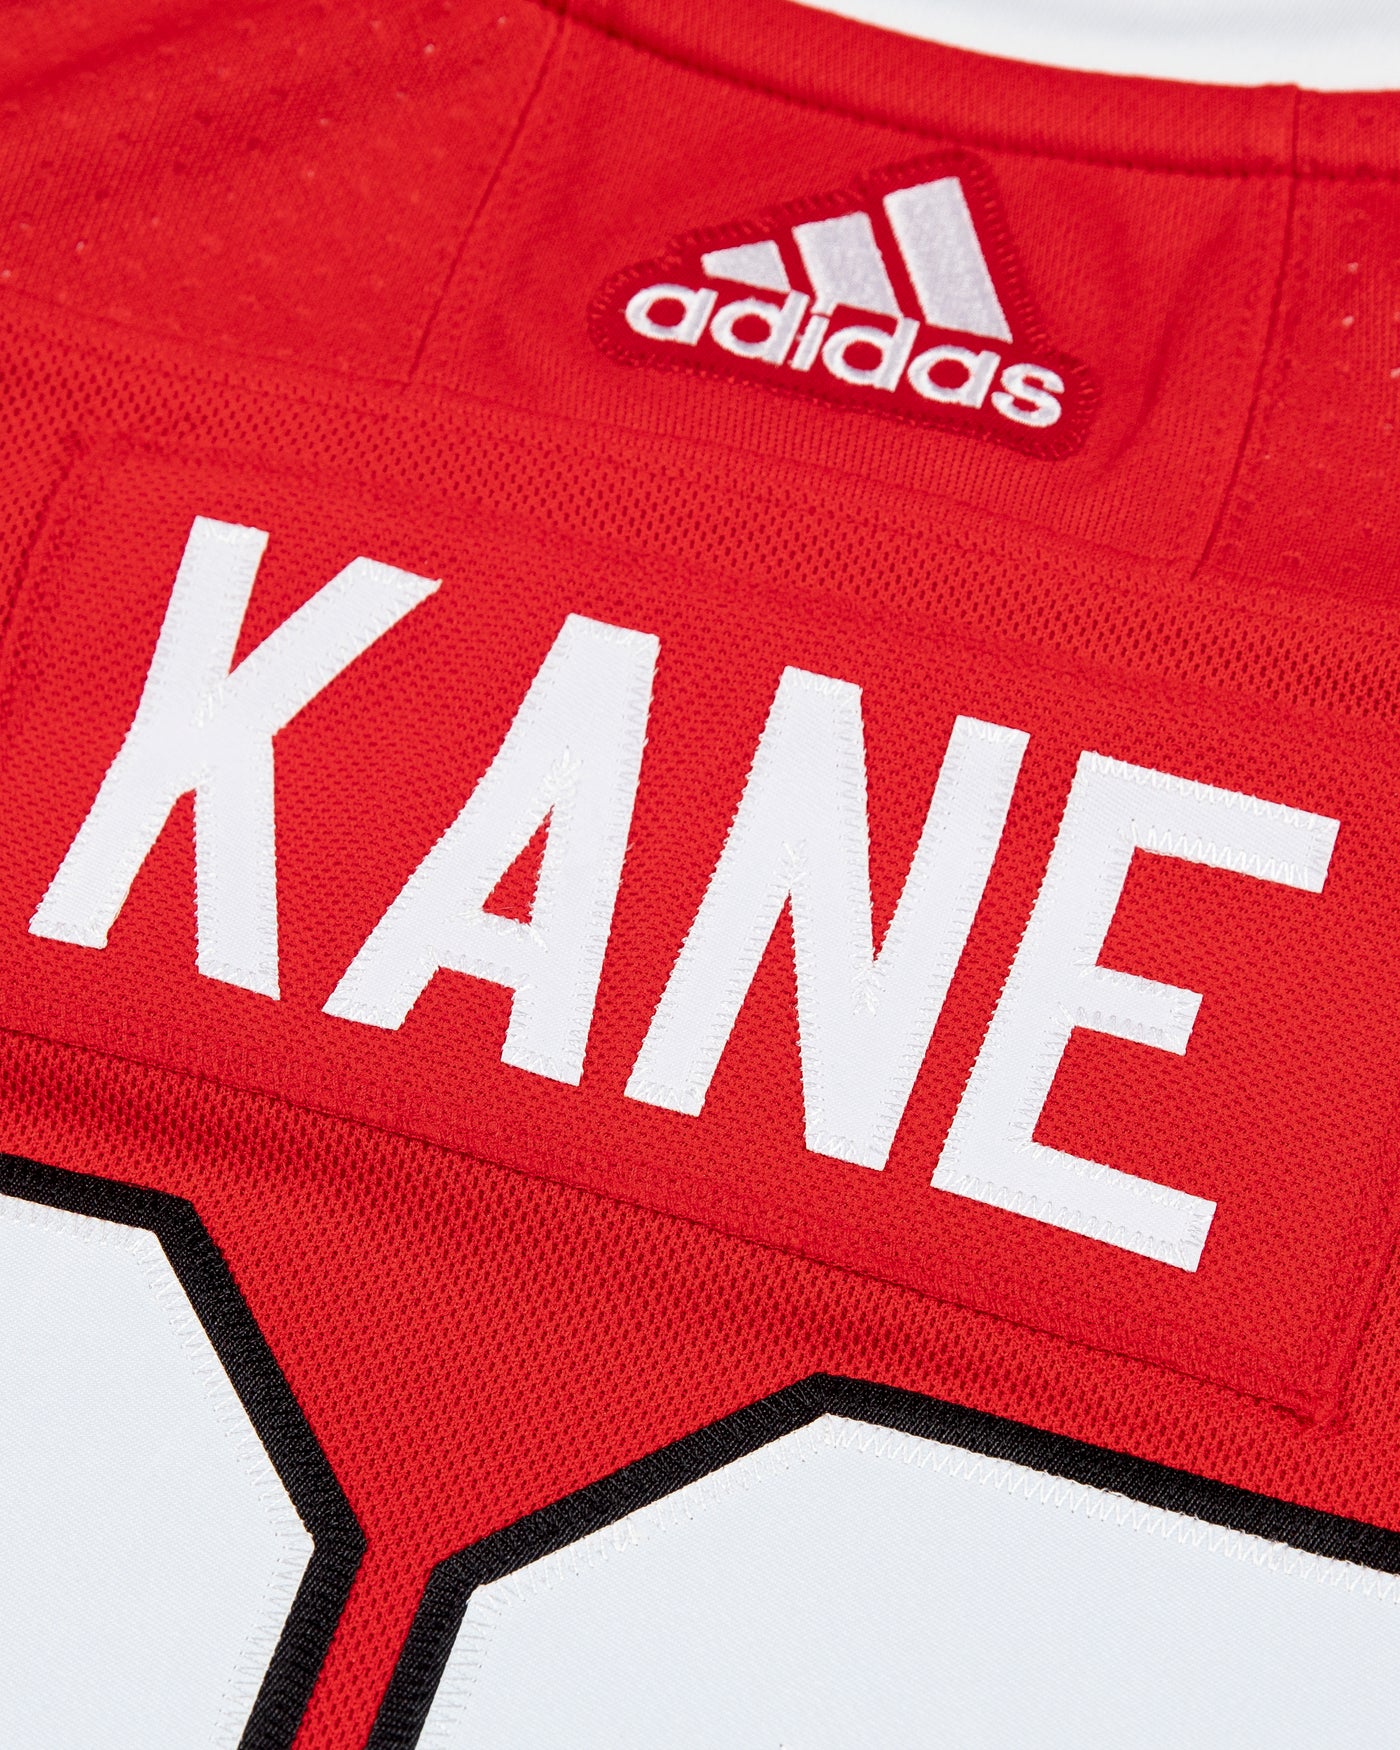 Patrick Kane Chicago Blackhawks Fanatics Authentic Autographed Red Adidas  Authentic Jersey